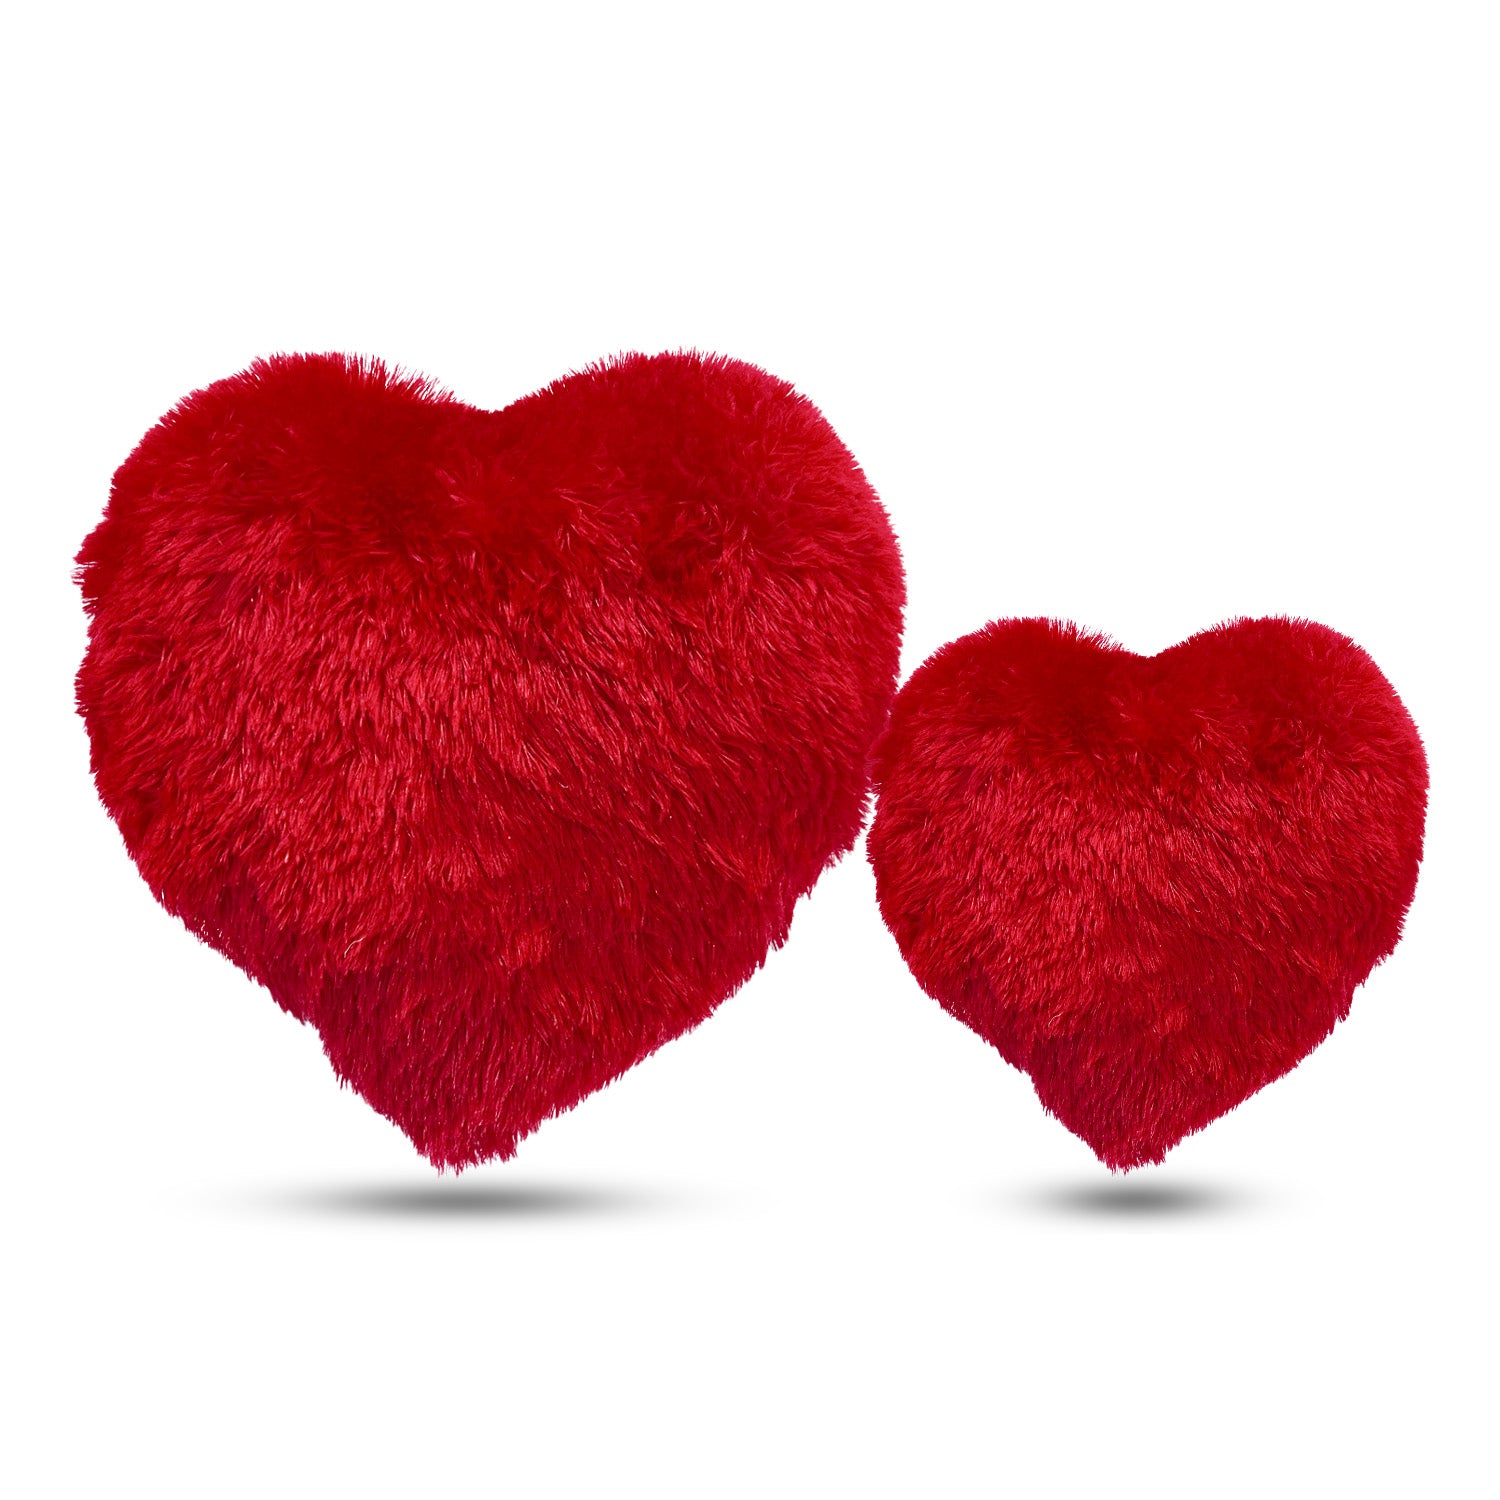 Sleepsia Heart Shaped Pillows- Combo